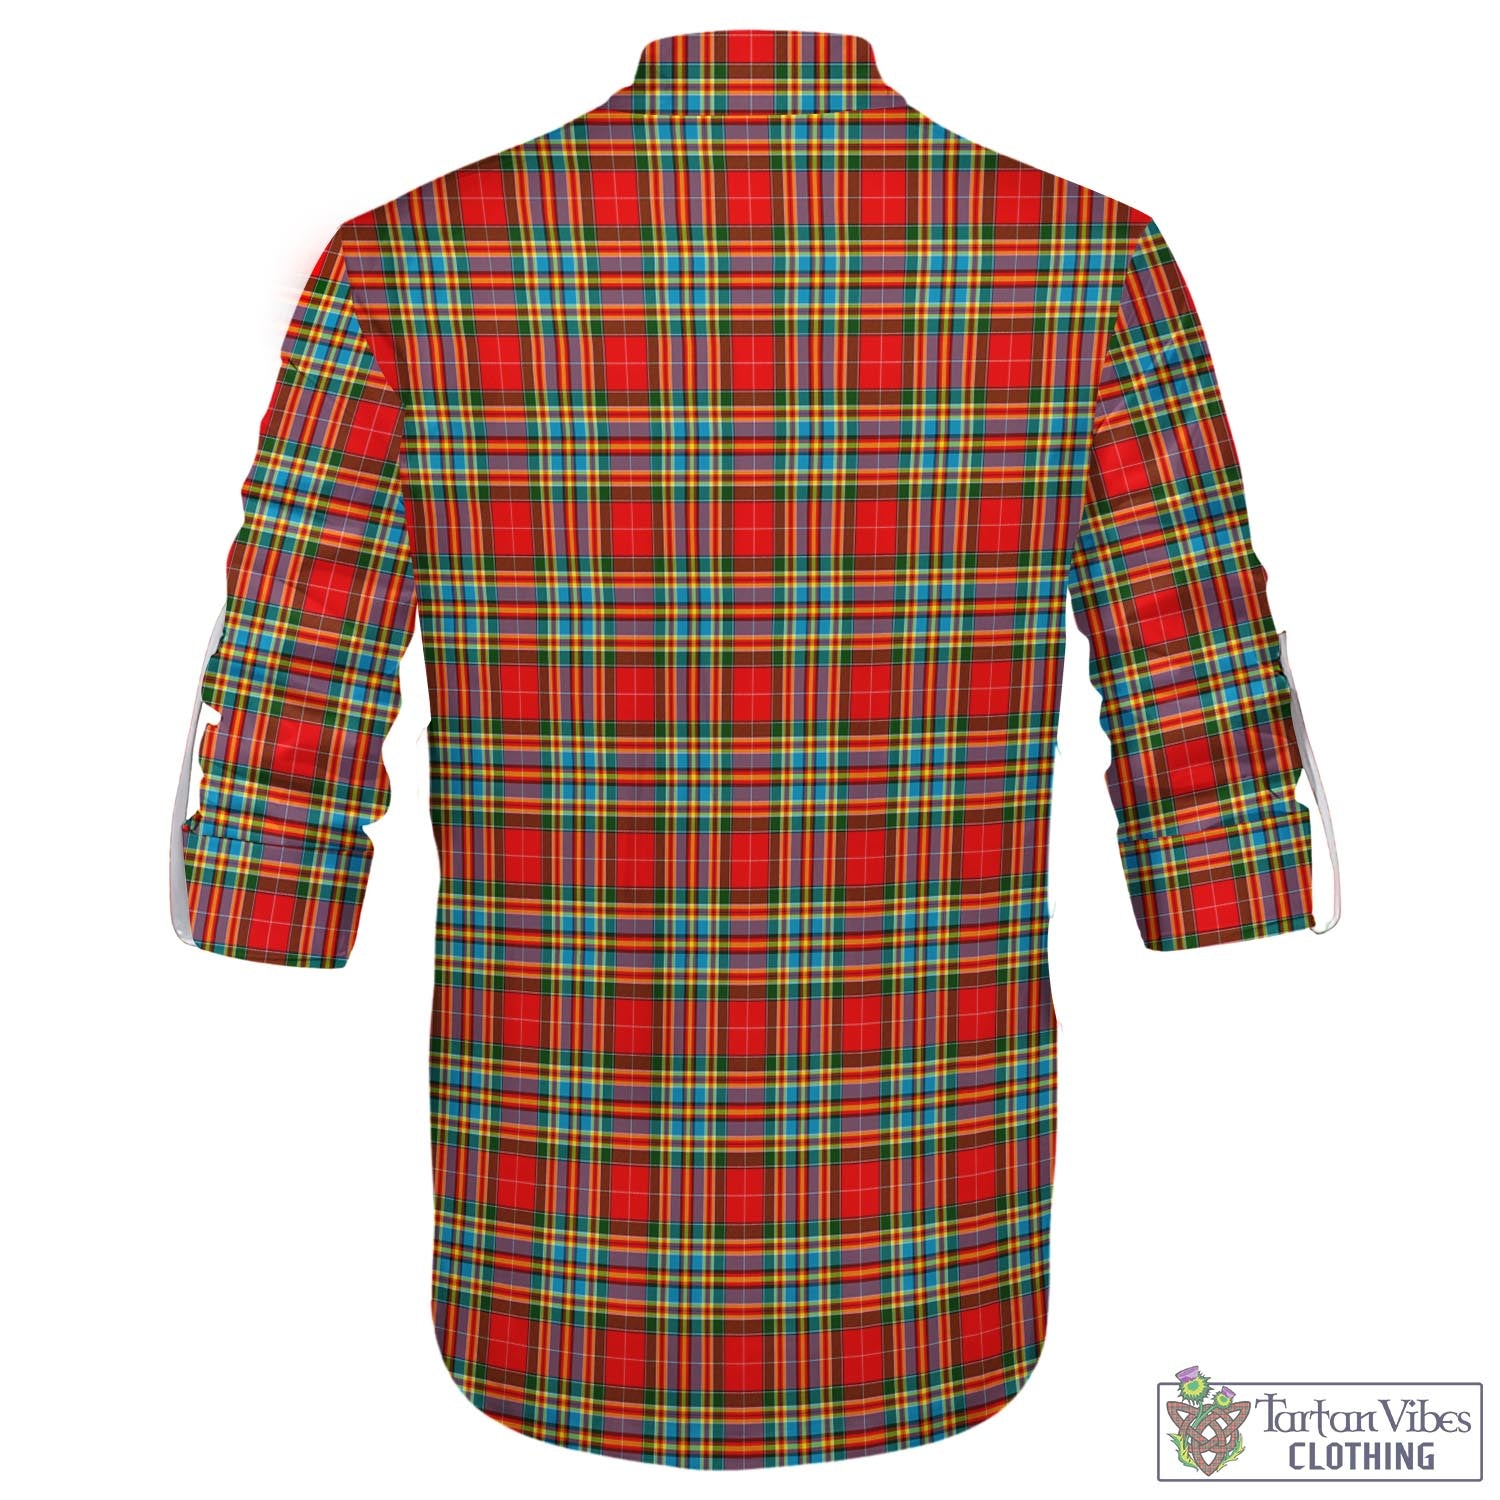 Tartan Vibes Clothing Chattan Tartan Men's Scottish Traditional Jacobite Ghillie Kilt Shirt with Family Crest